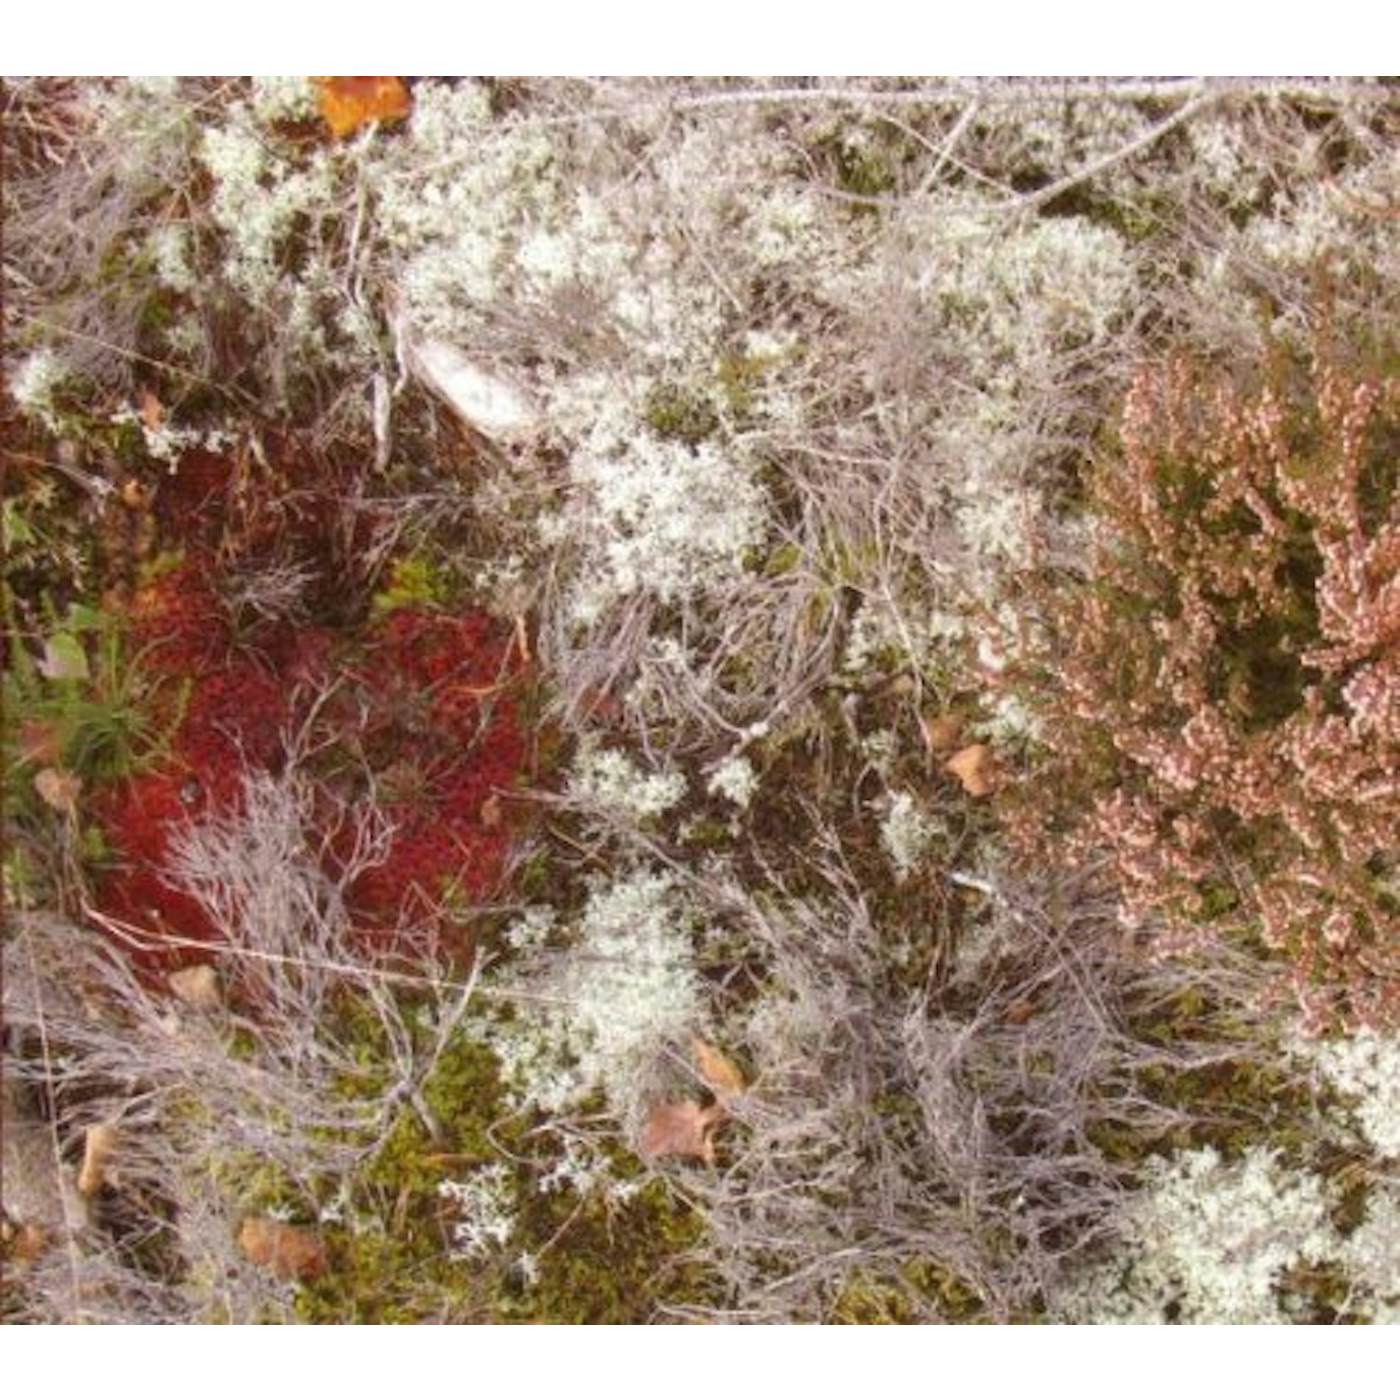 Fursaxa Mycorrhizae Realm Vinyl Record